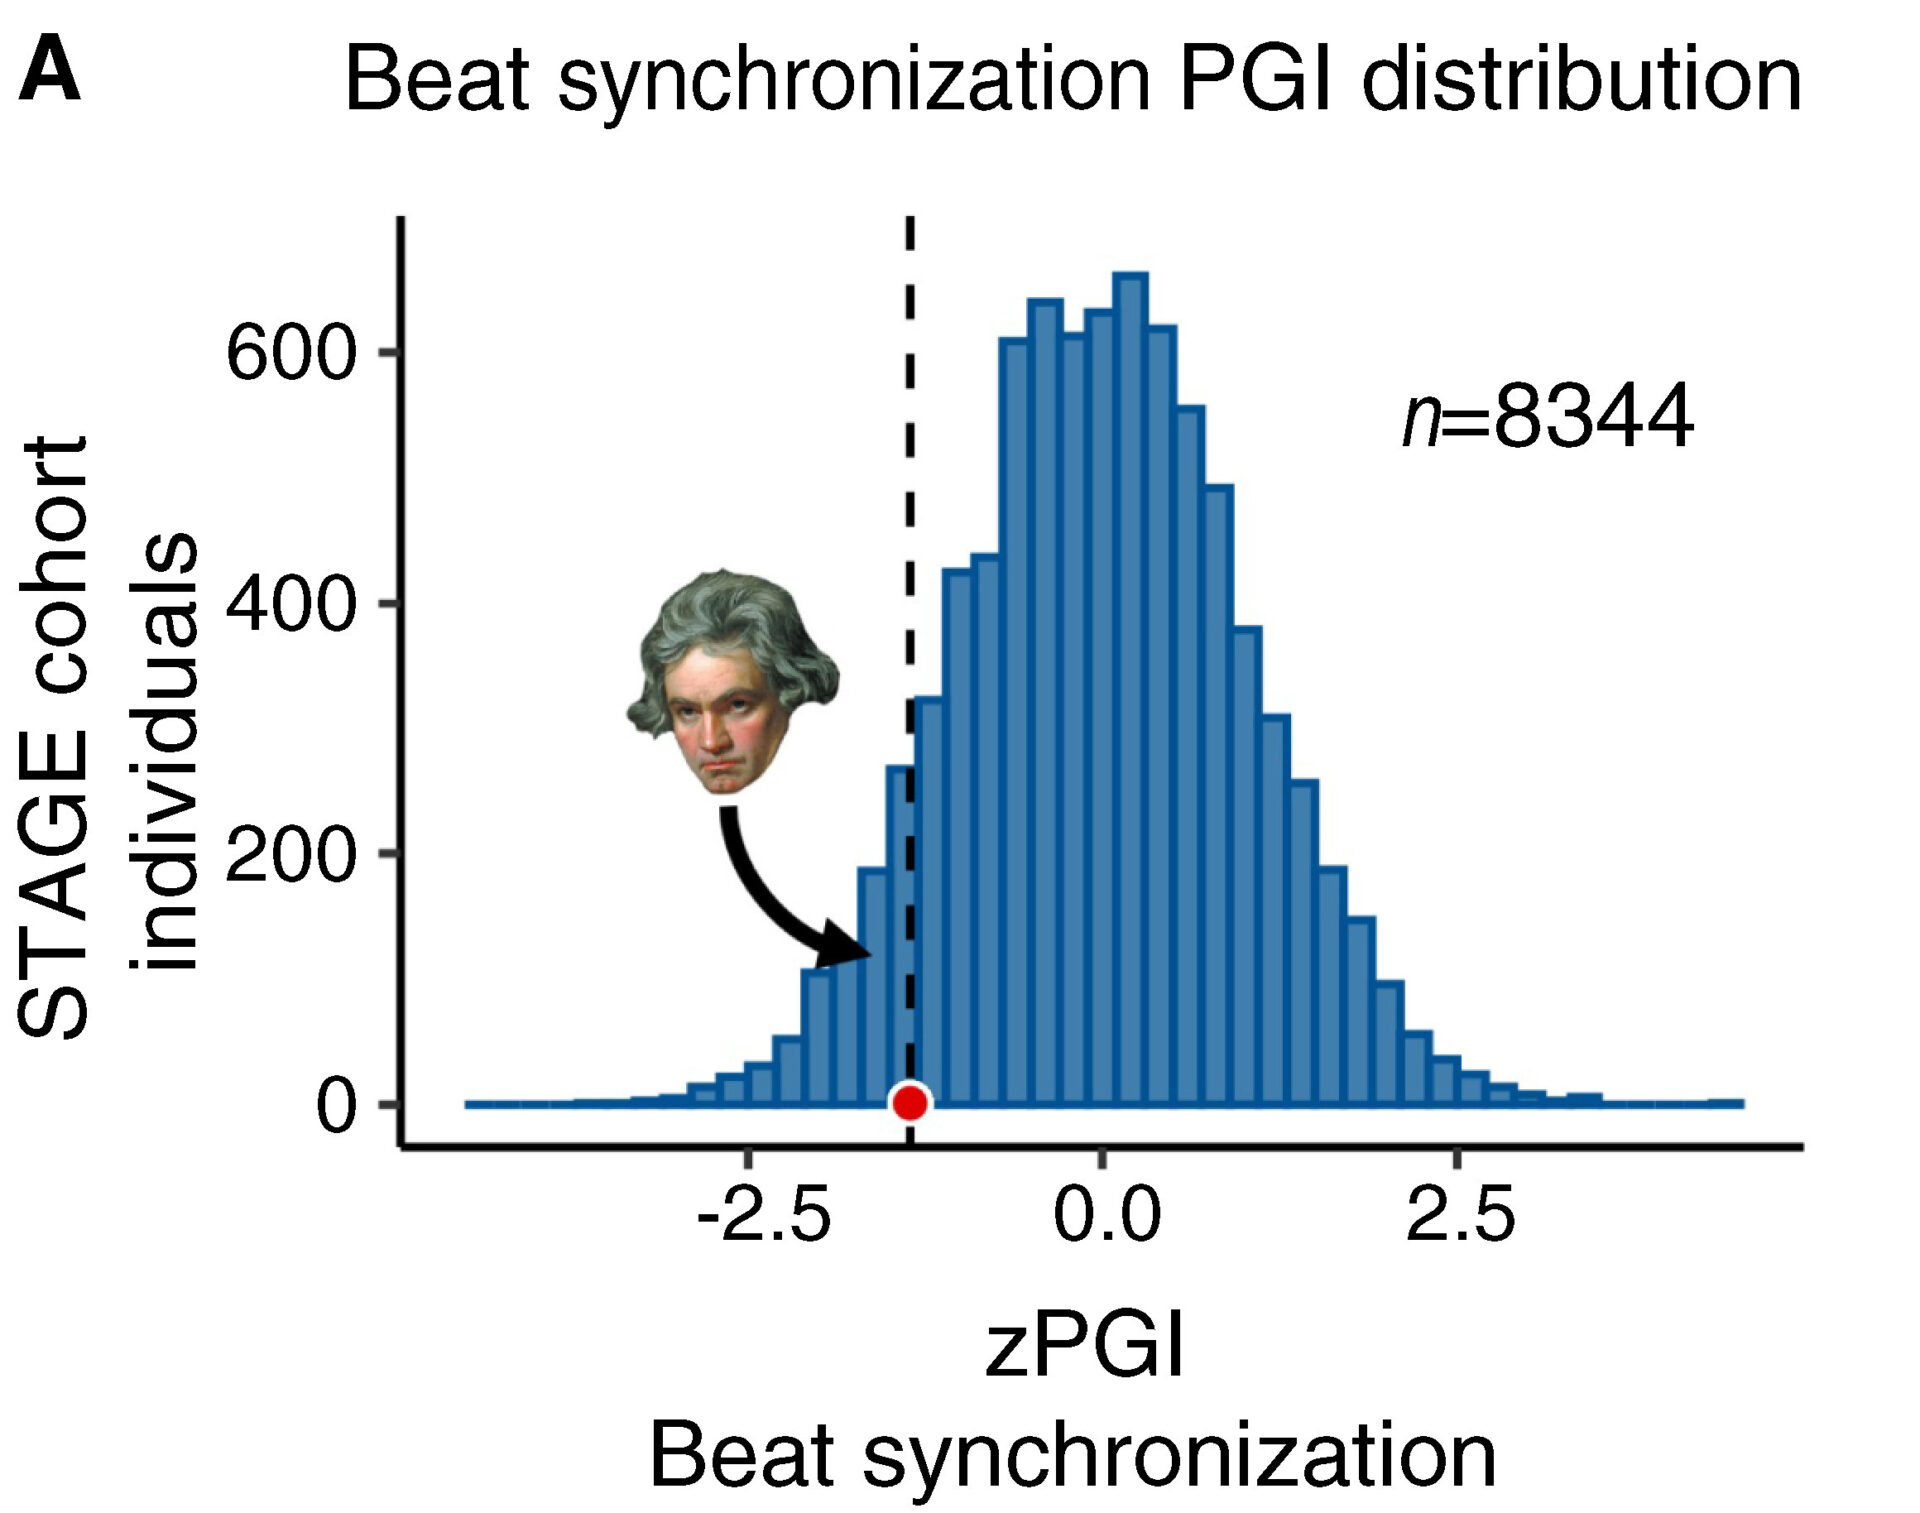 Beethoven's polygenic score